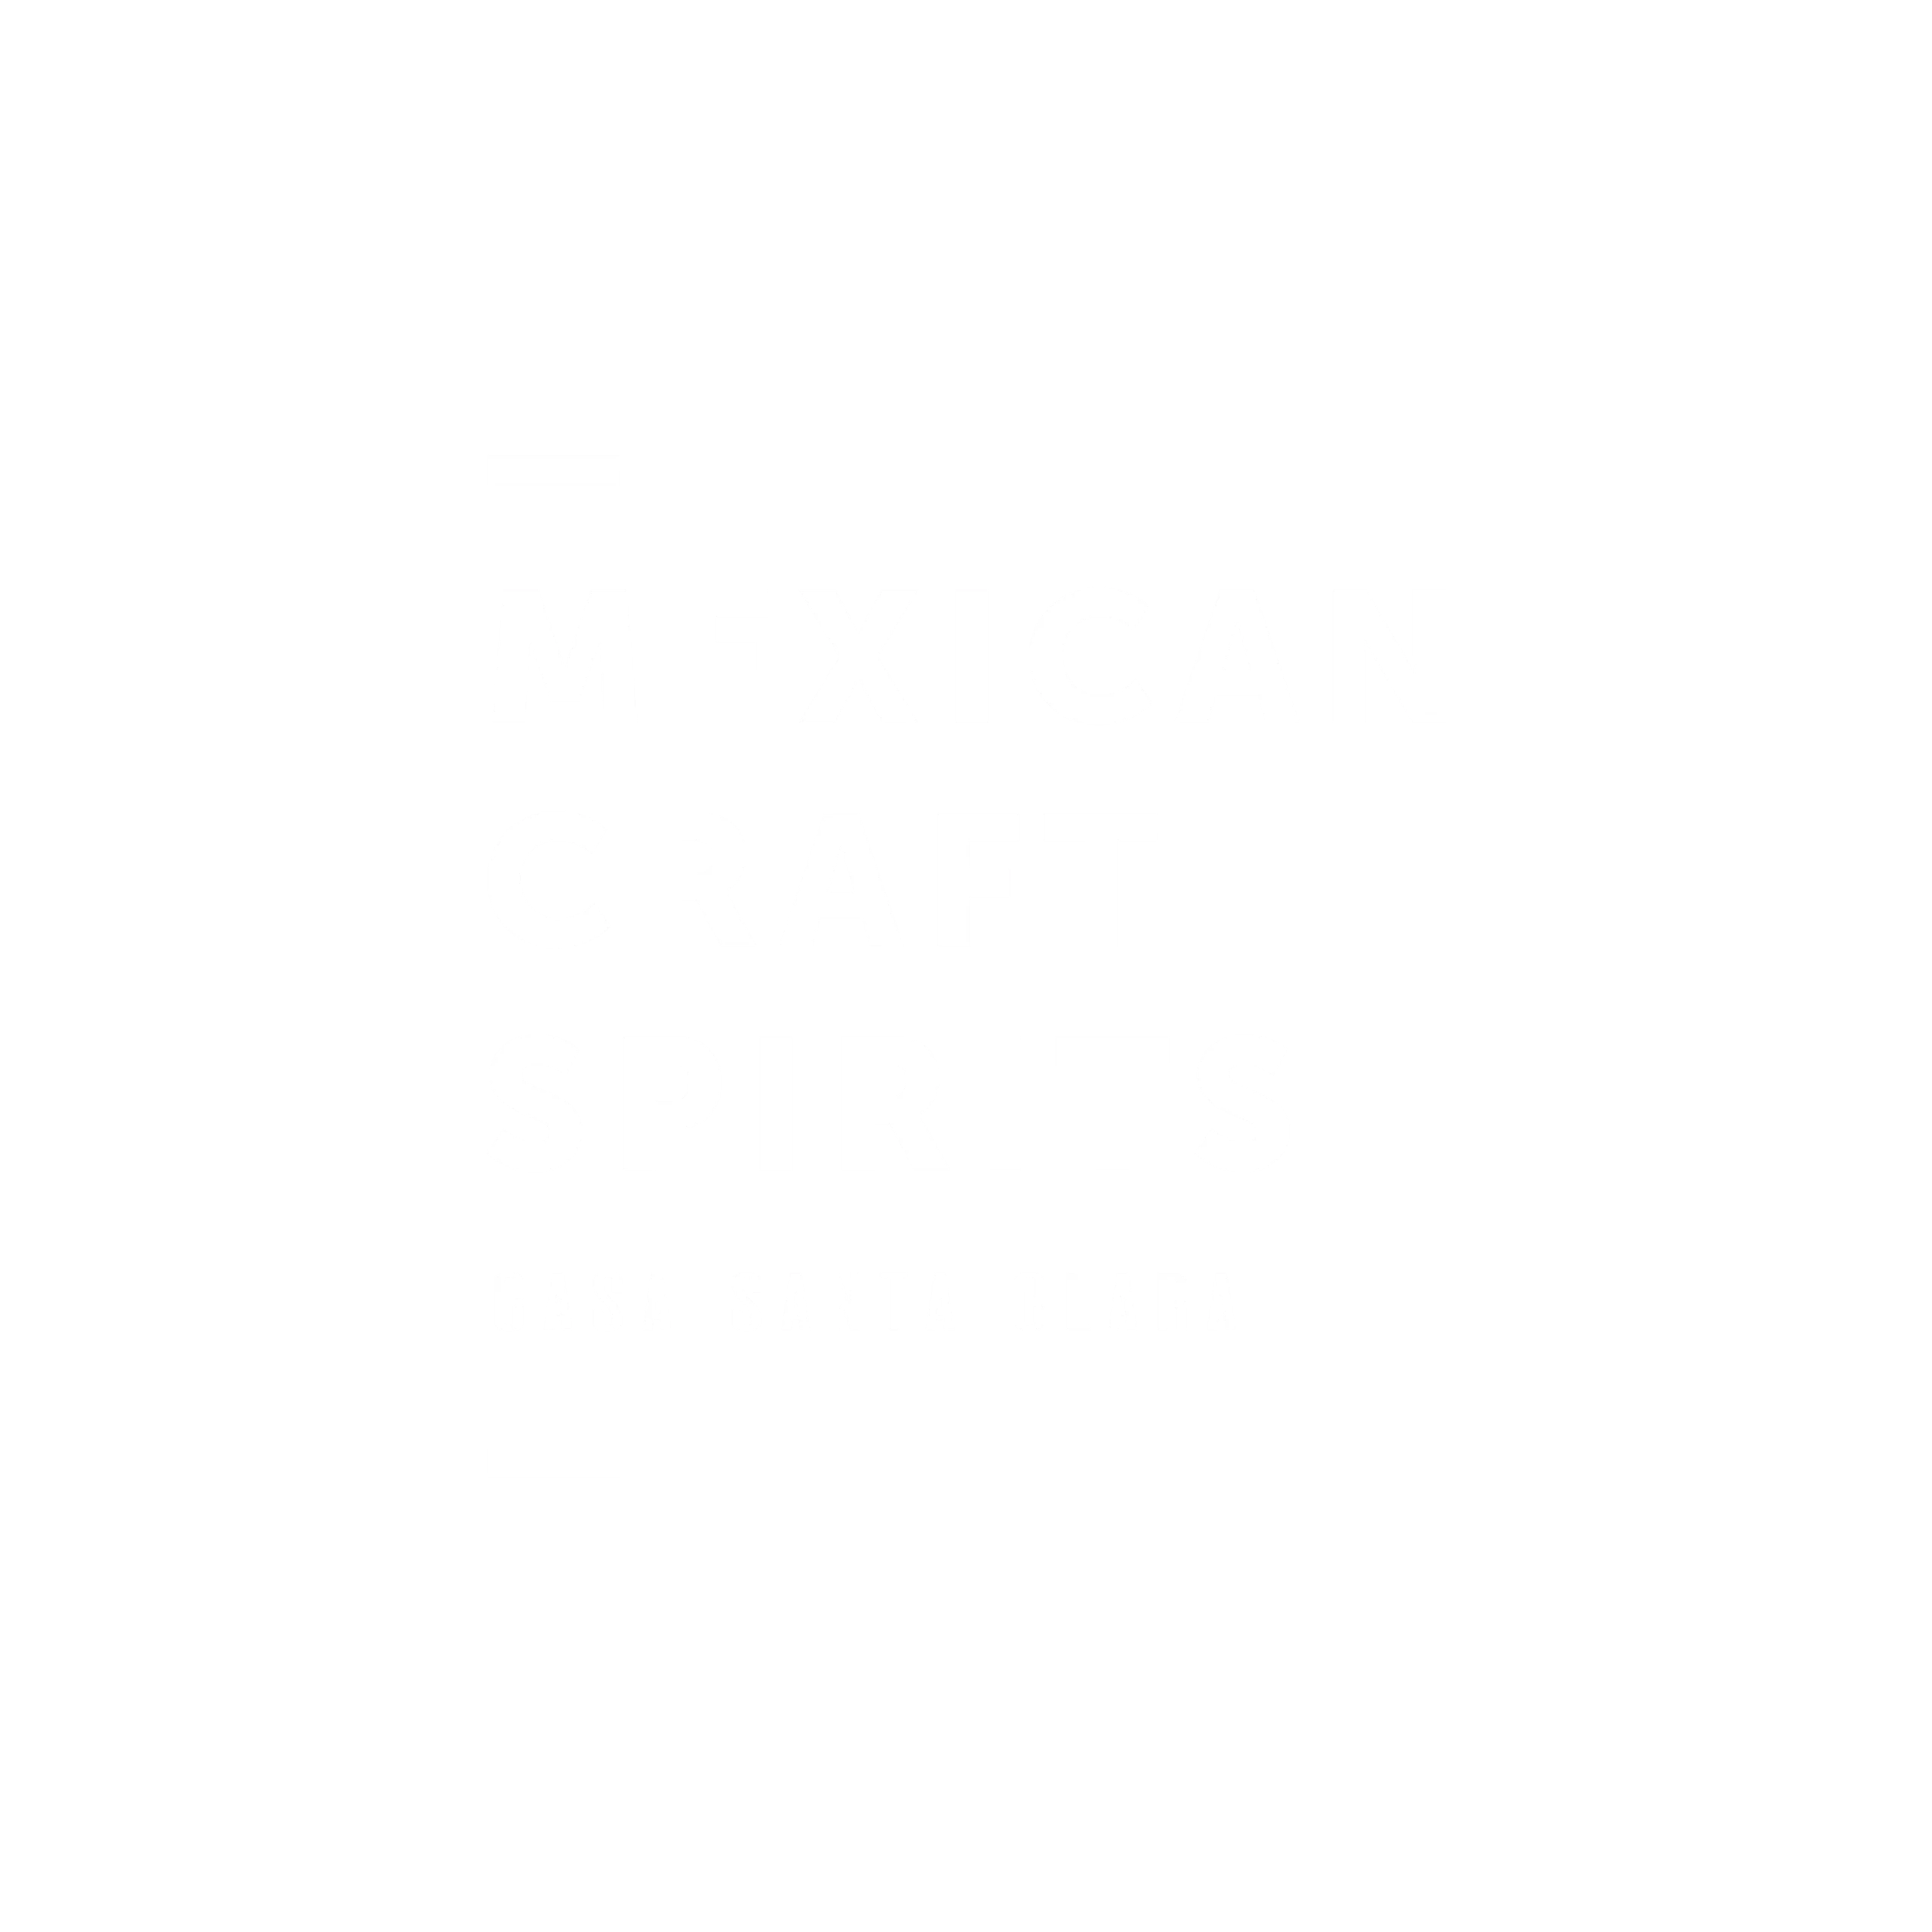 Mexican Craft Spirit logo blanco